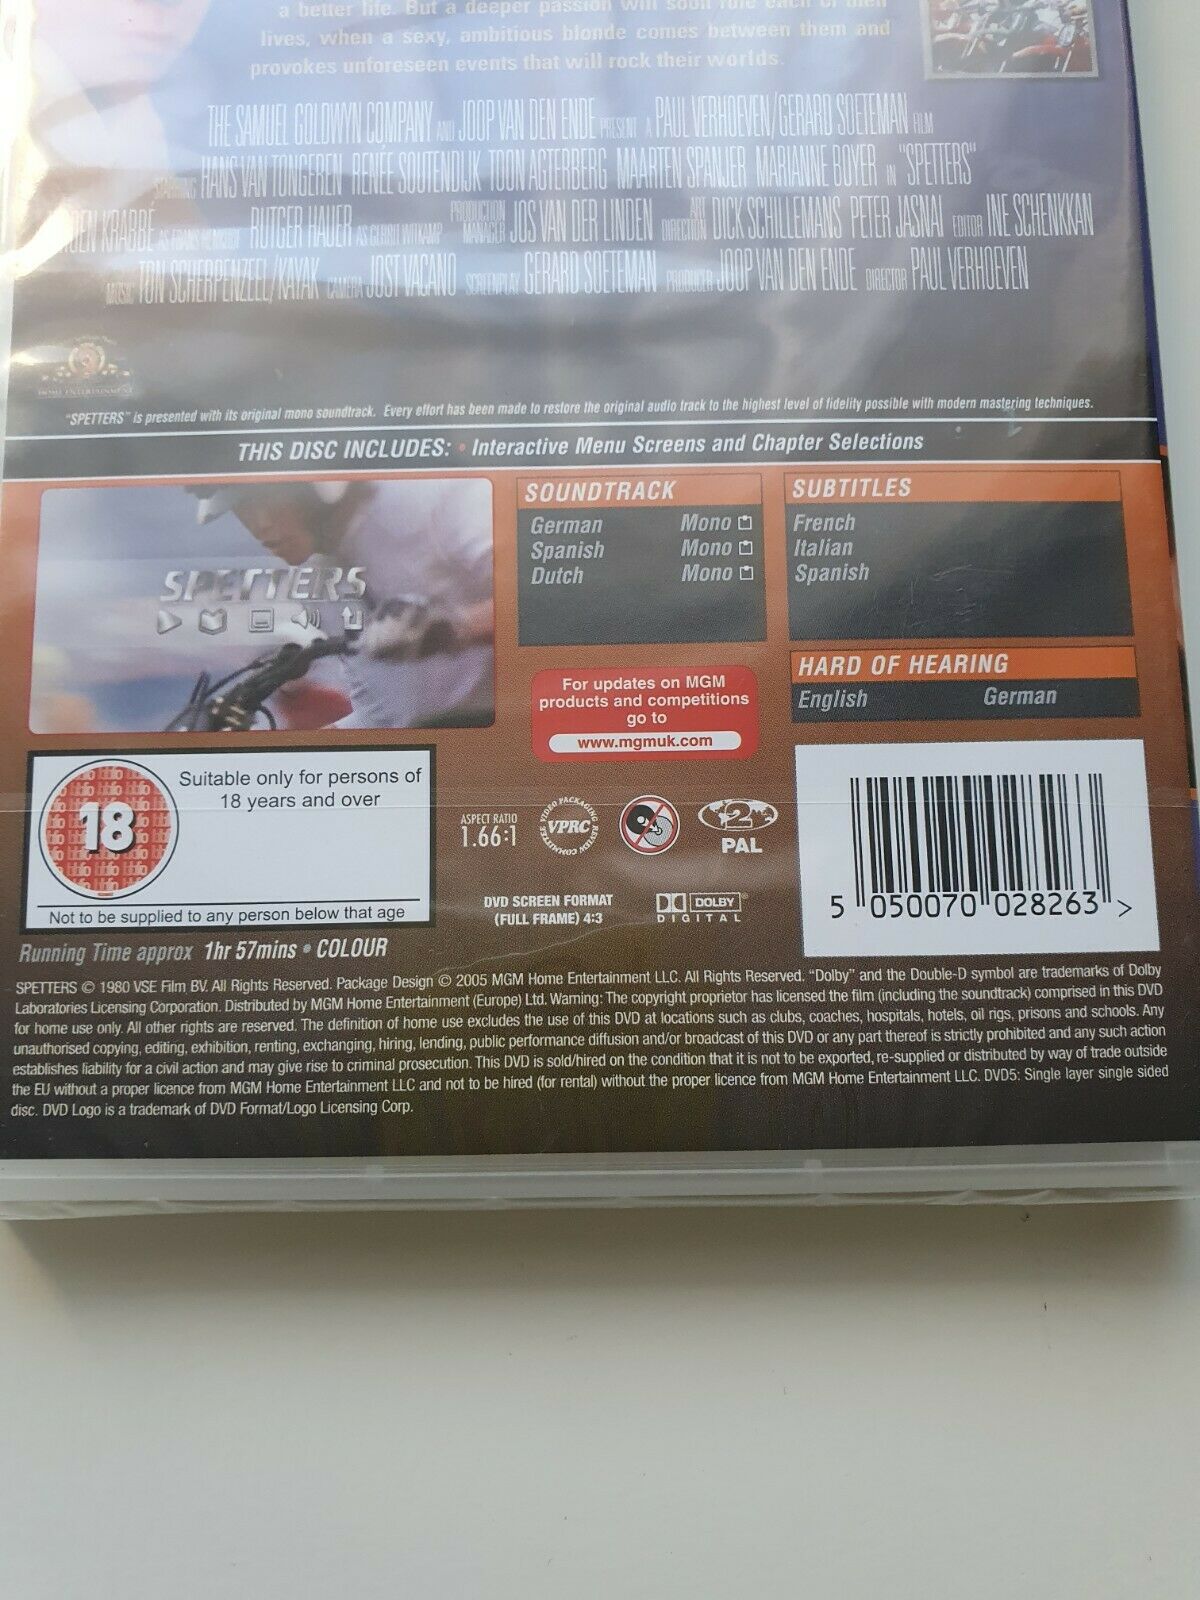 5050070028263 Spetters Complete & Uncut DVD Verhoeven 2005 NEW SEALED